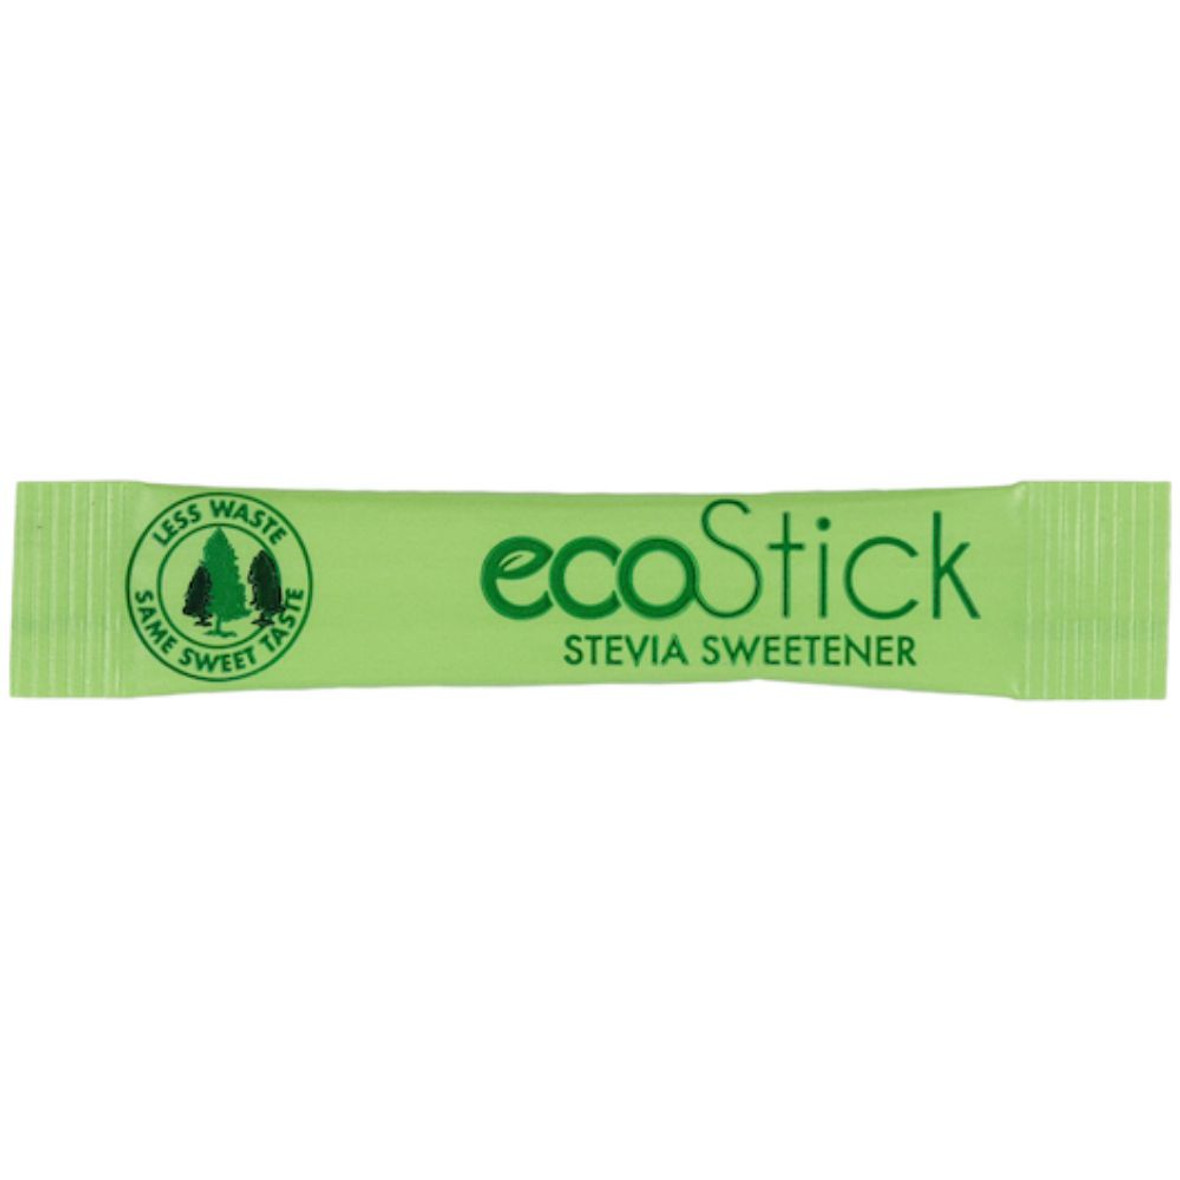 EcoStick Zero Calorie Stevia Sweetener, Green, 0.5 Grams